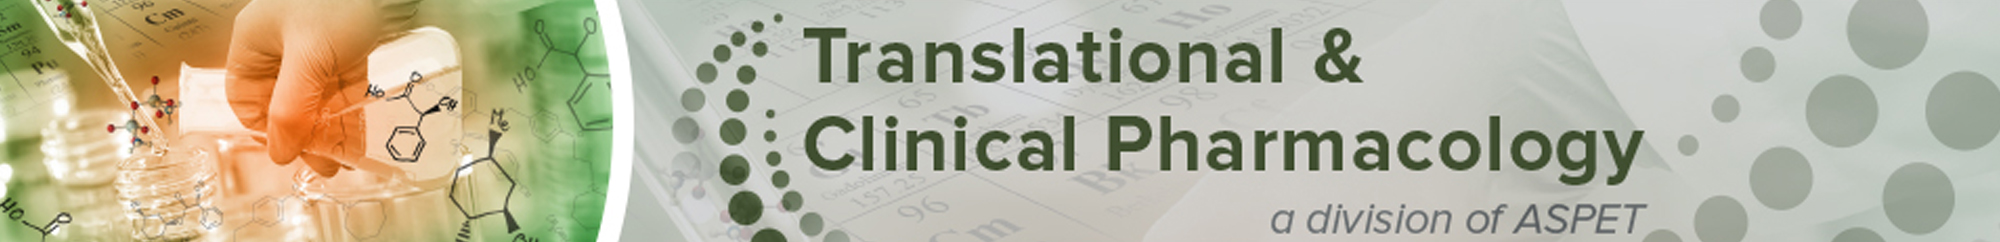 Translational and Clinical Pharmacology